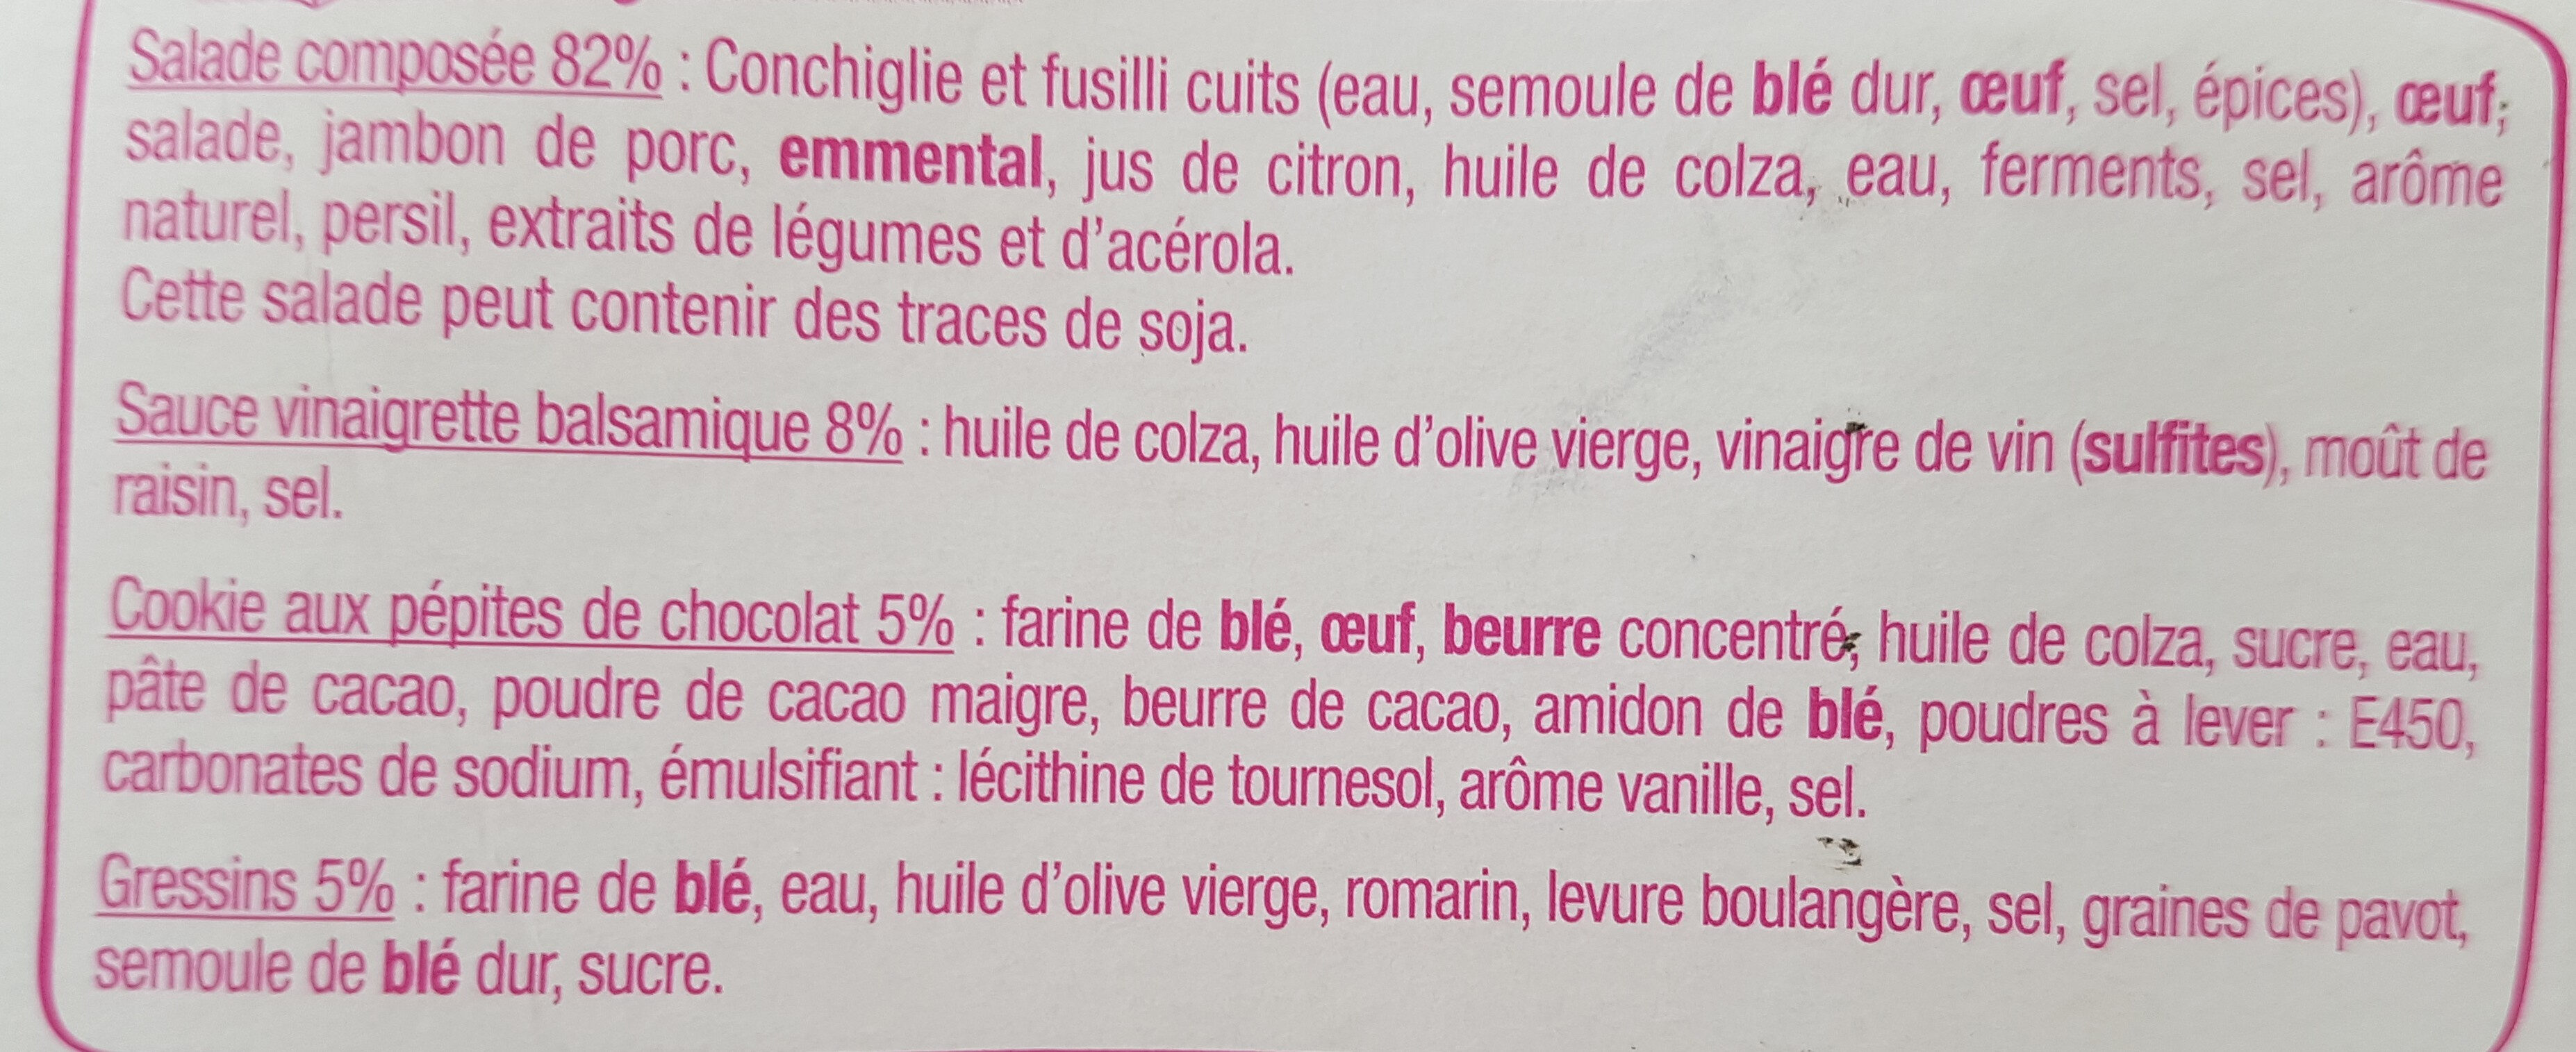 Salade & Compagnie - Montmartre - Ingrediënten - fr